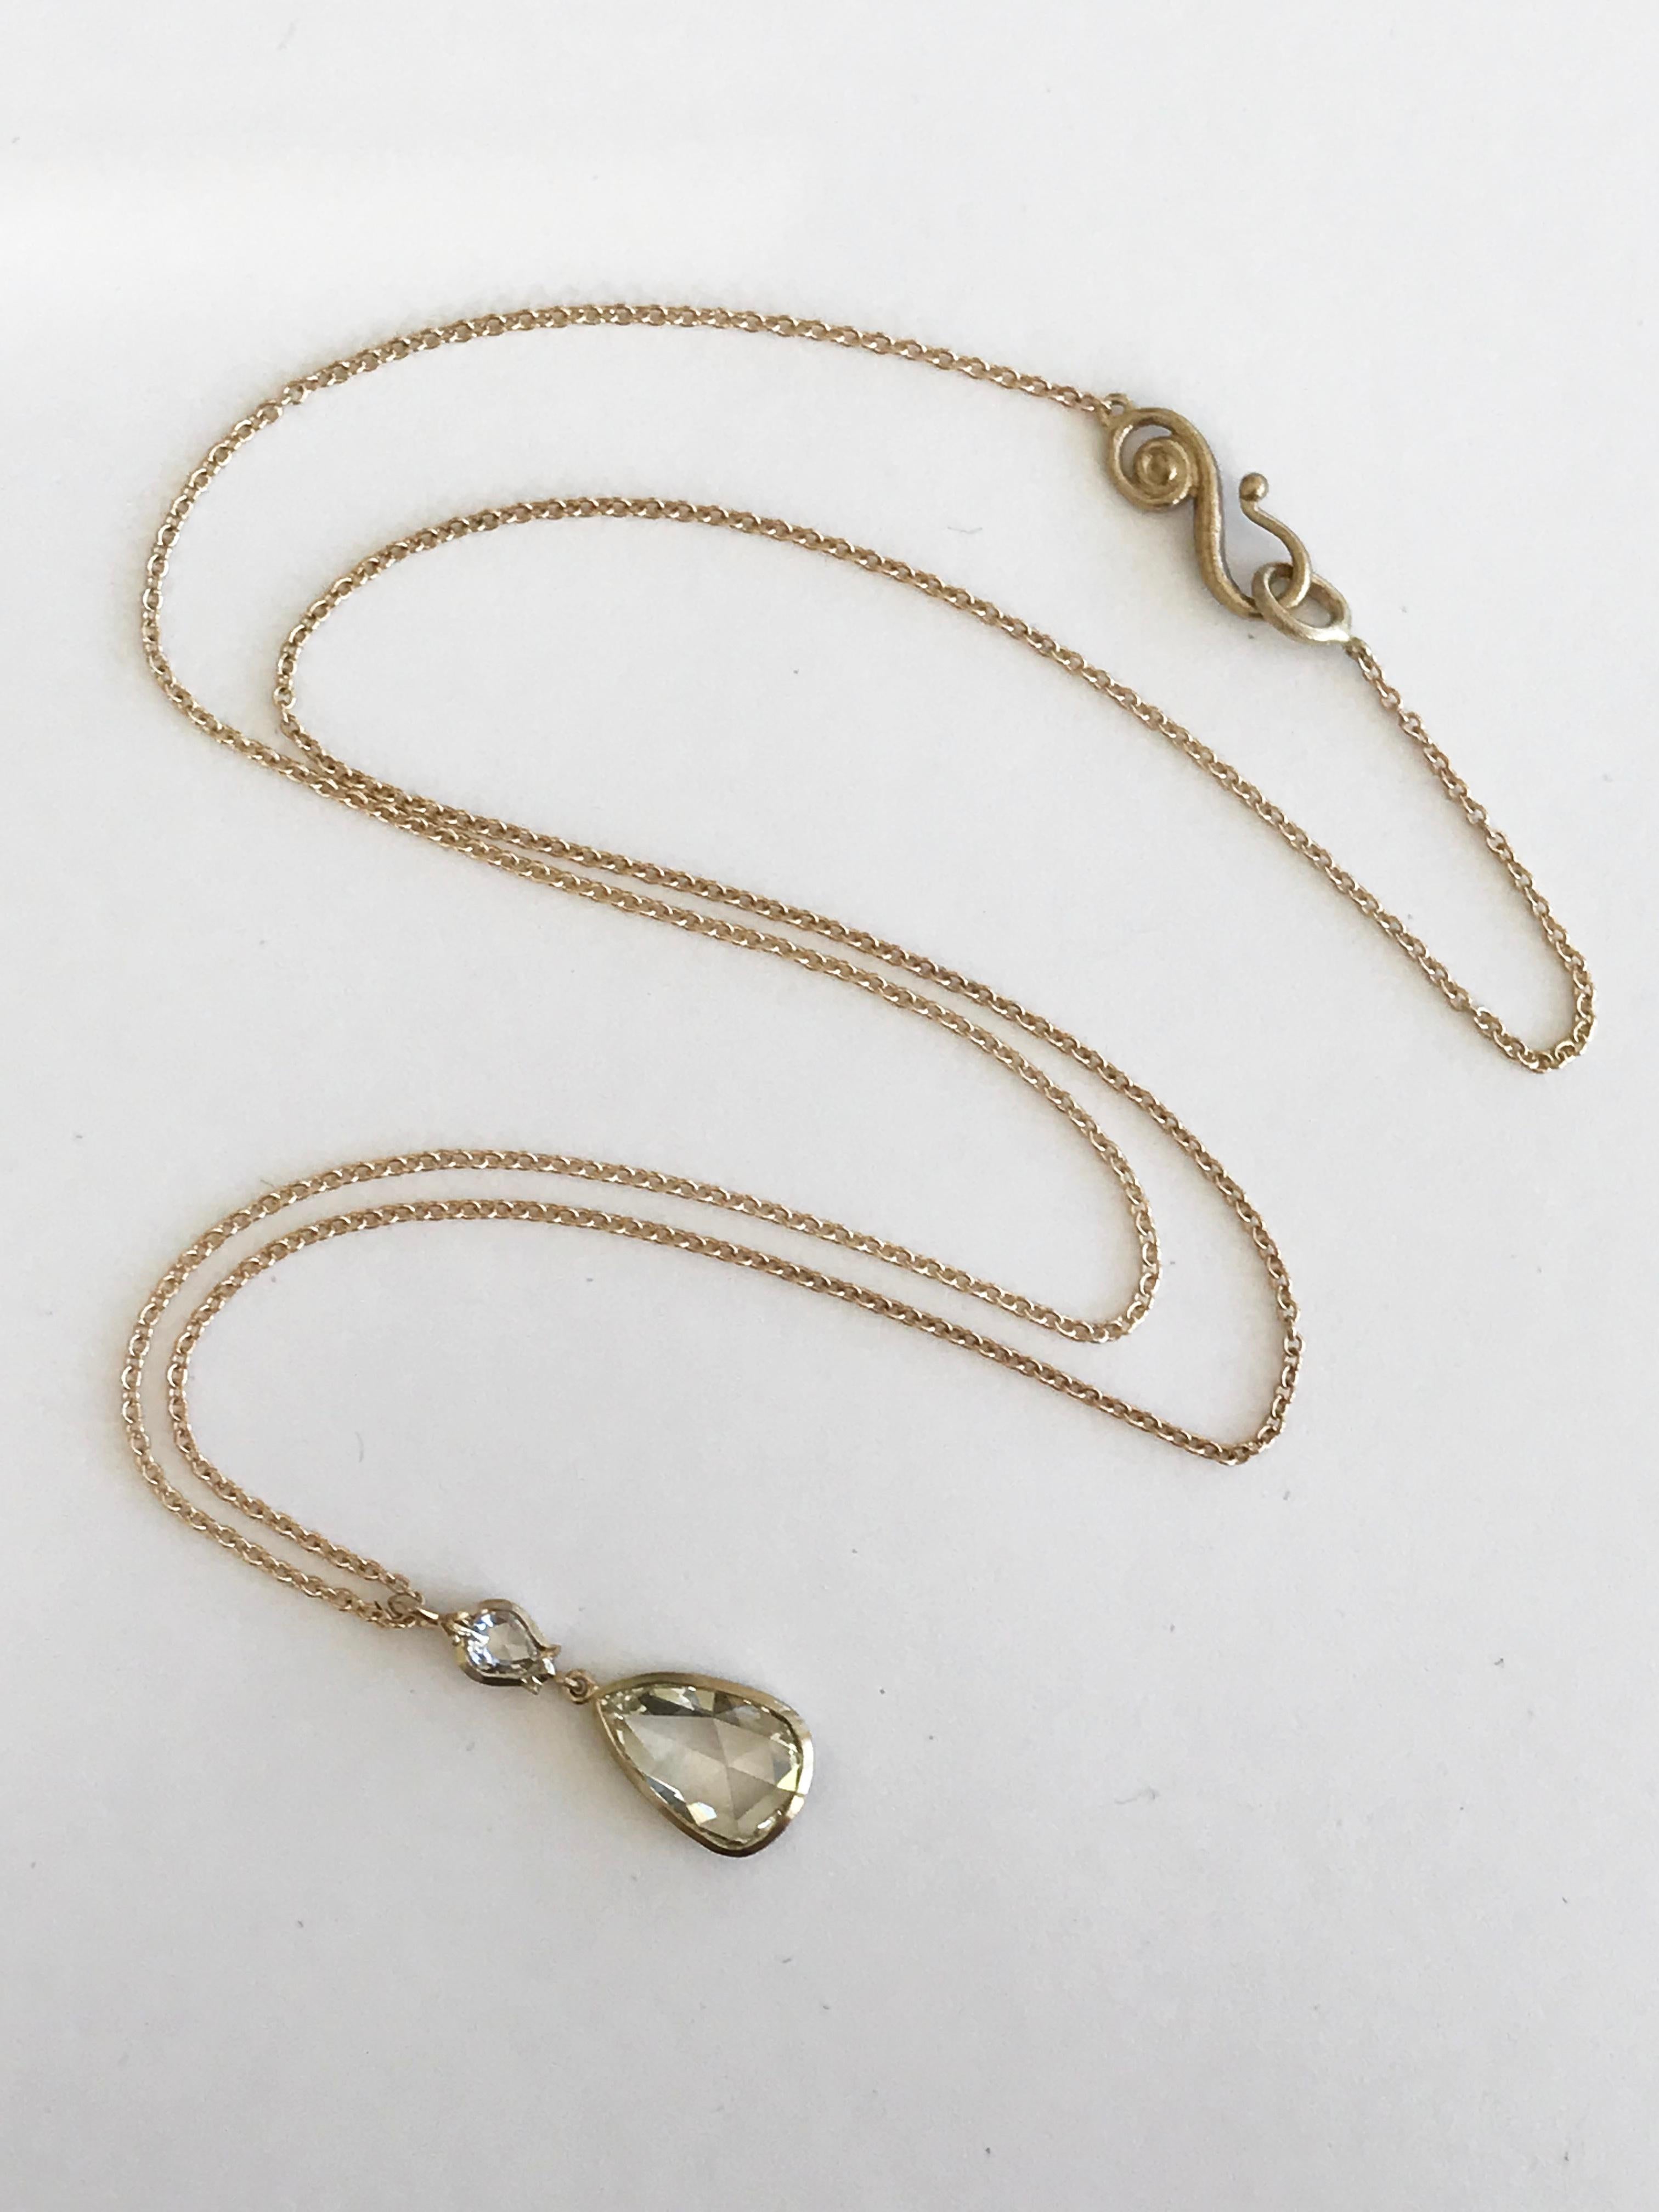 Dalben 1.2 Carat Pear Shape Diamond White Gold Necklace For Sale 6